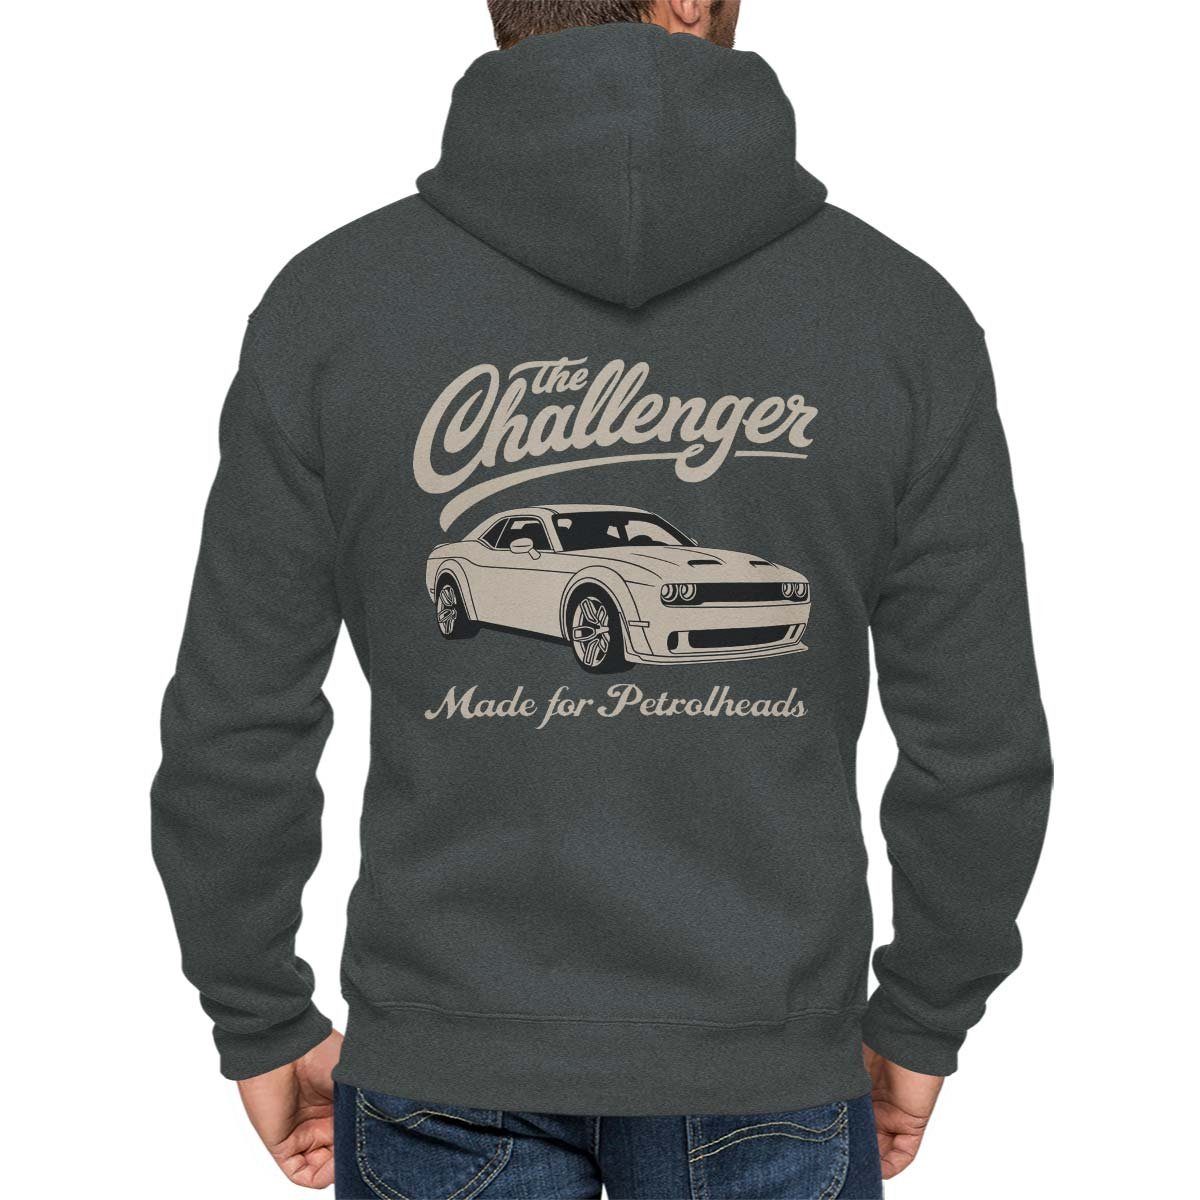 Rebel On Wheels Kapuzensweatjacke Kapuzenjacke US-Car Zip Melange / mit The Anthra Auto Hoodie Challenger Motiv